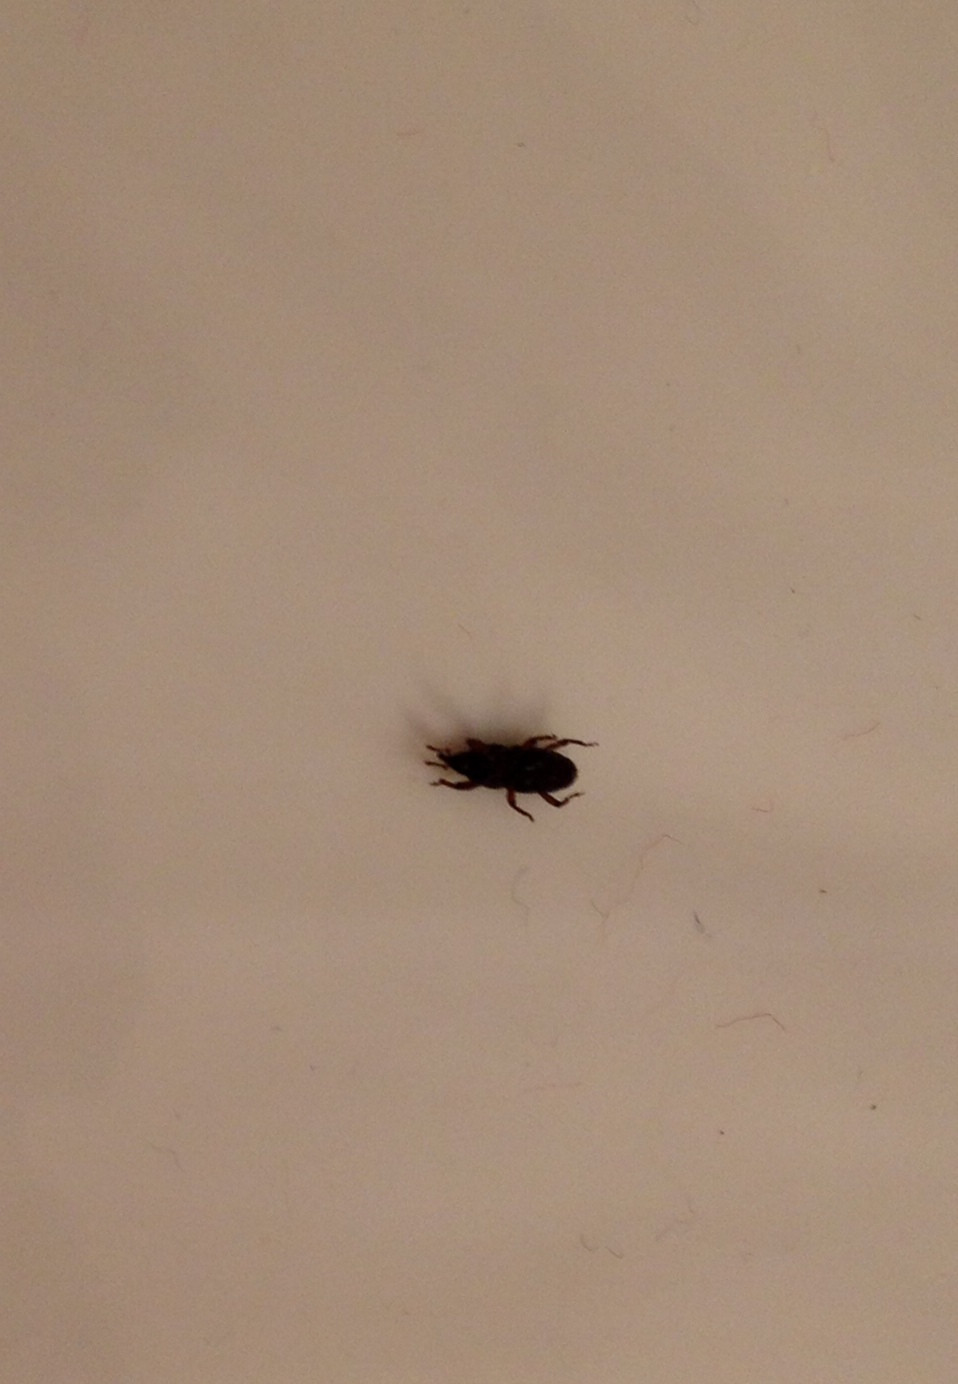 Small Black Bugs In Bathroom
 We keep seeing these bugs in the bathroom tub & floor